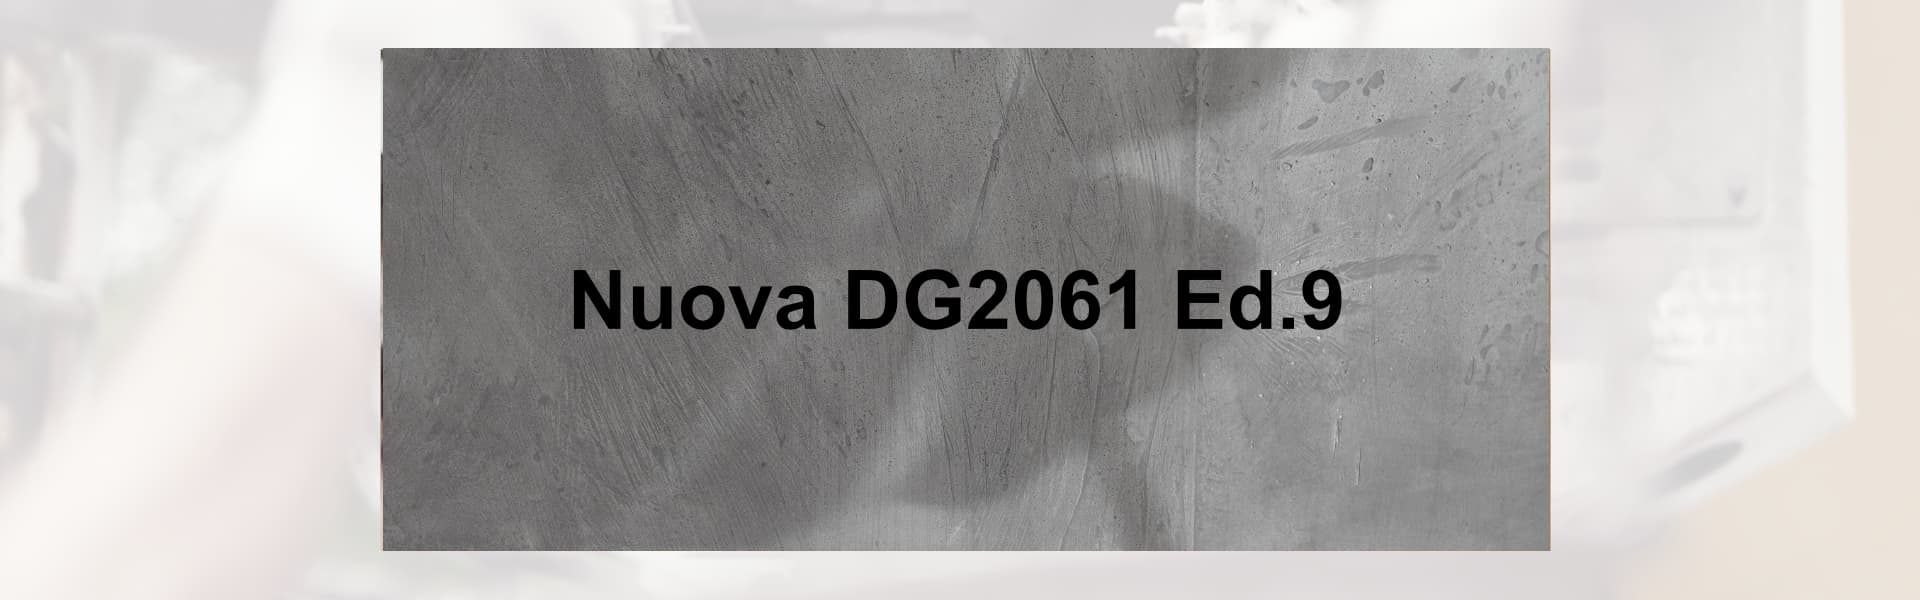 nuova dg2061 Ed.9